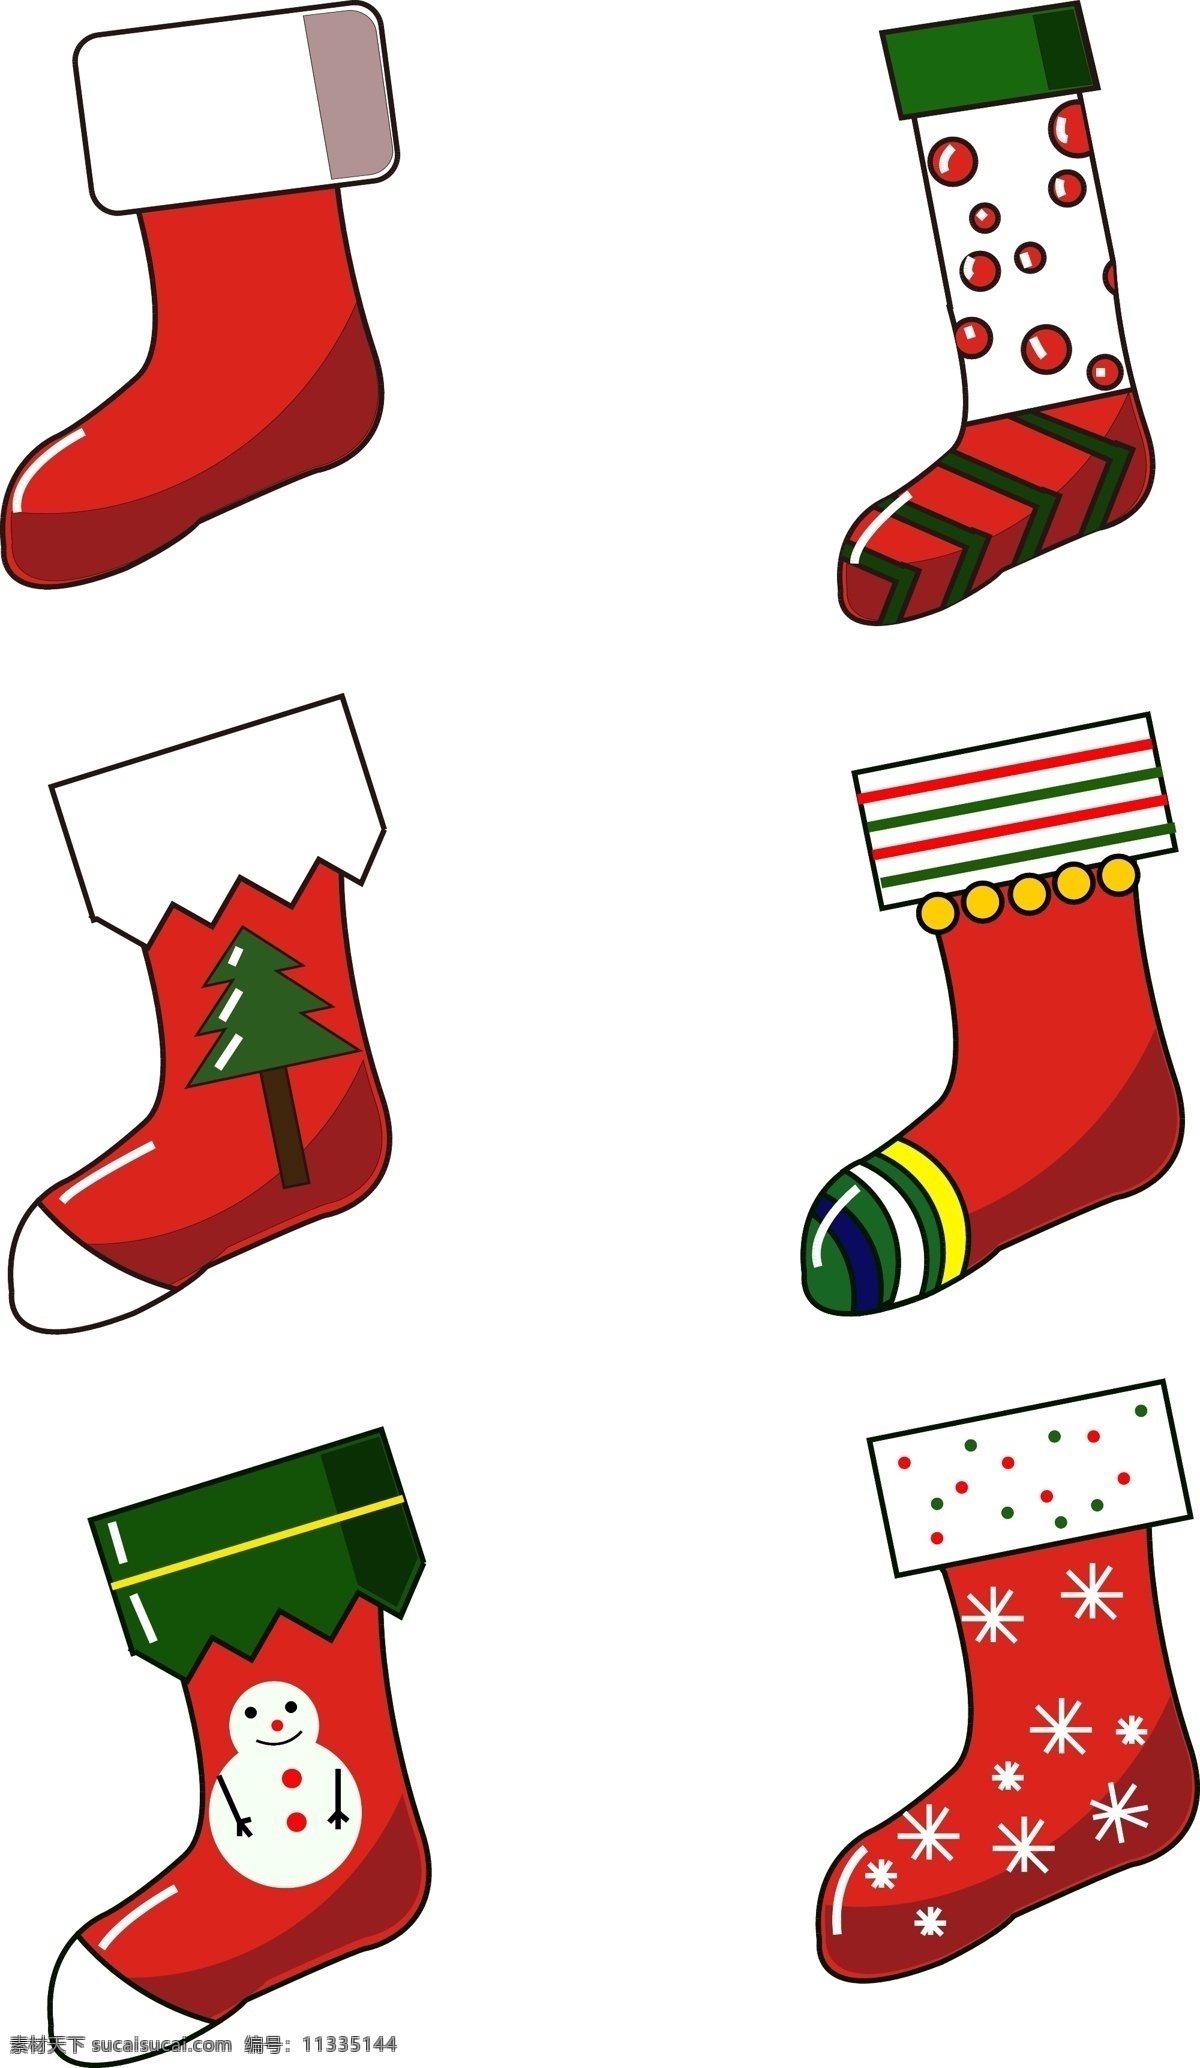 mbe 风格 小 清新 简约 可爱 圣诞 袜 图标 小清新 袜子 圣诞袜 矢量